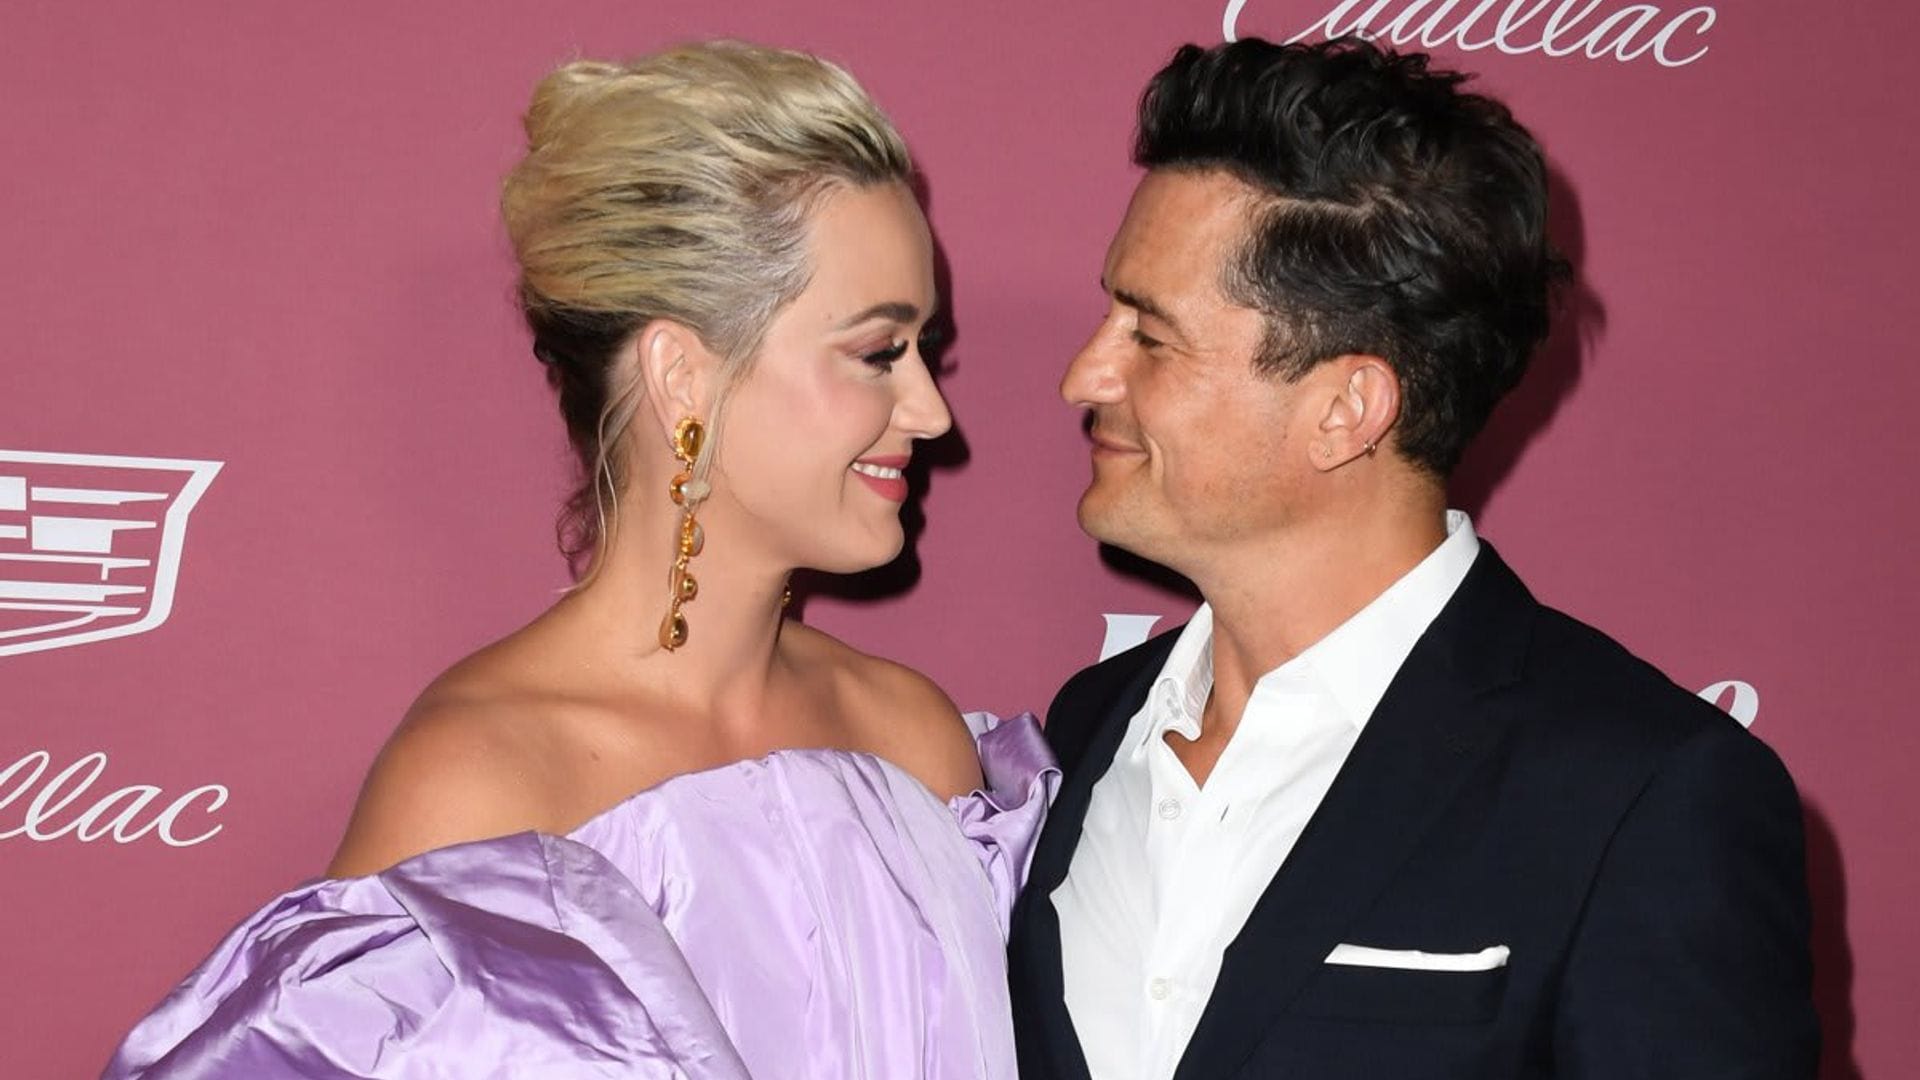 Katy Perry wishes her “sexy” fiancé Orlando Bloom a Happy 45th Birthday